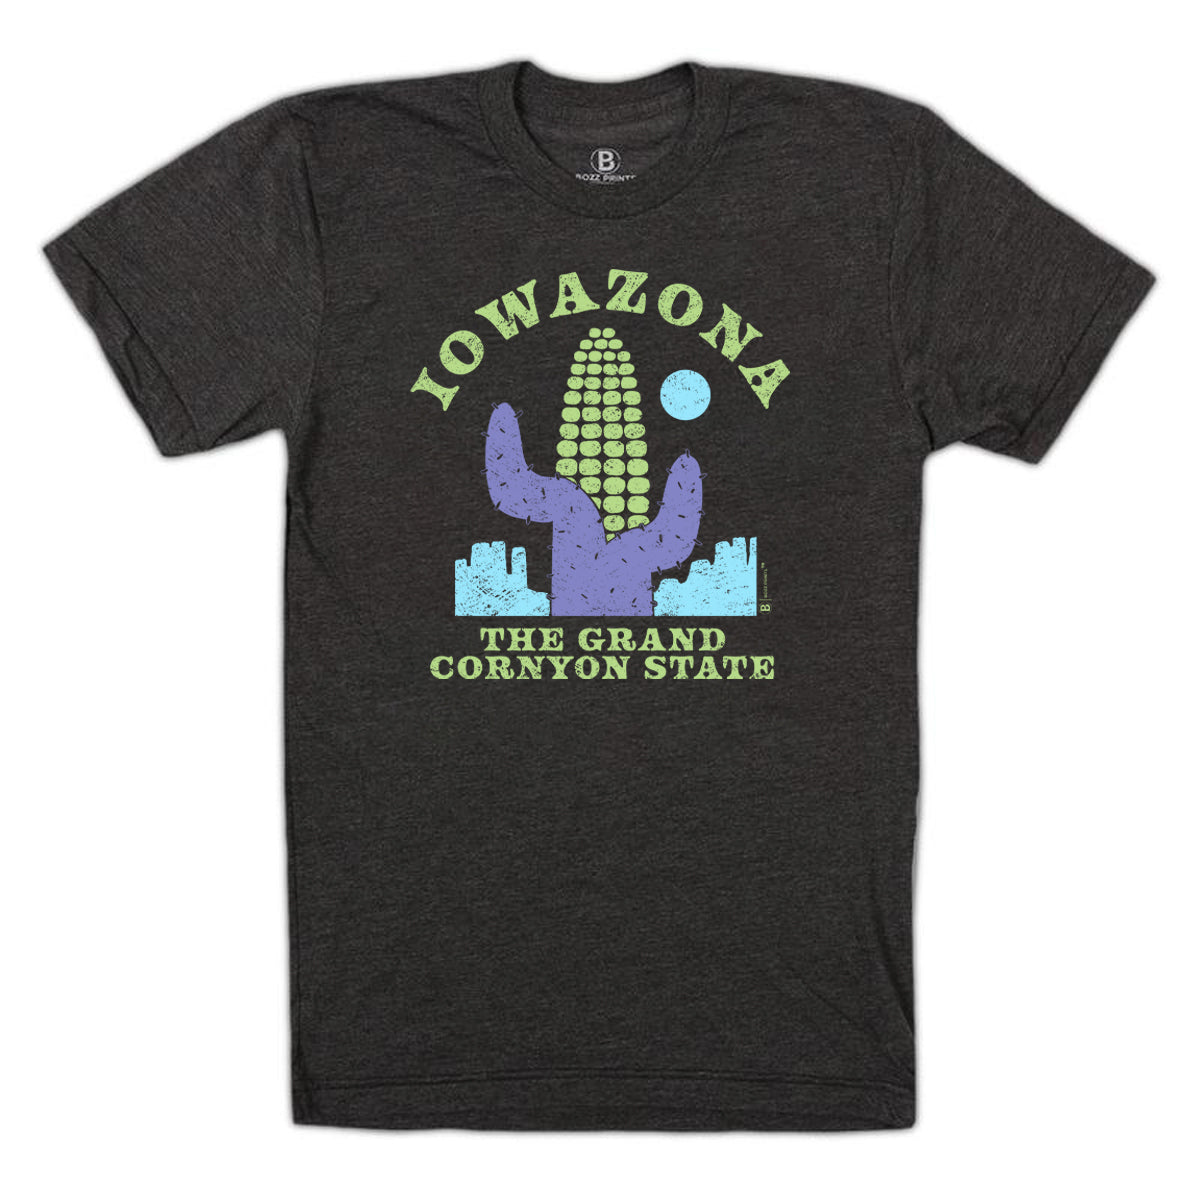 Iowazona Black T-Shirt - Bozz Prints